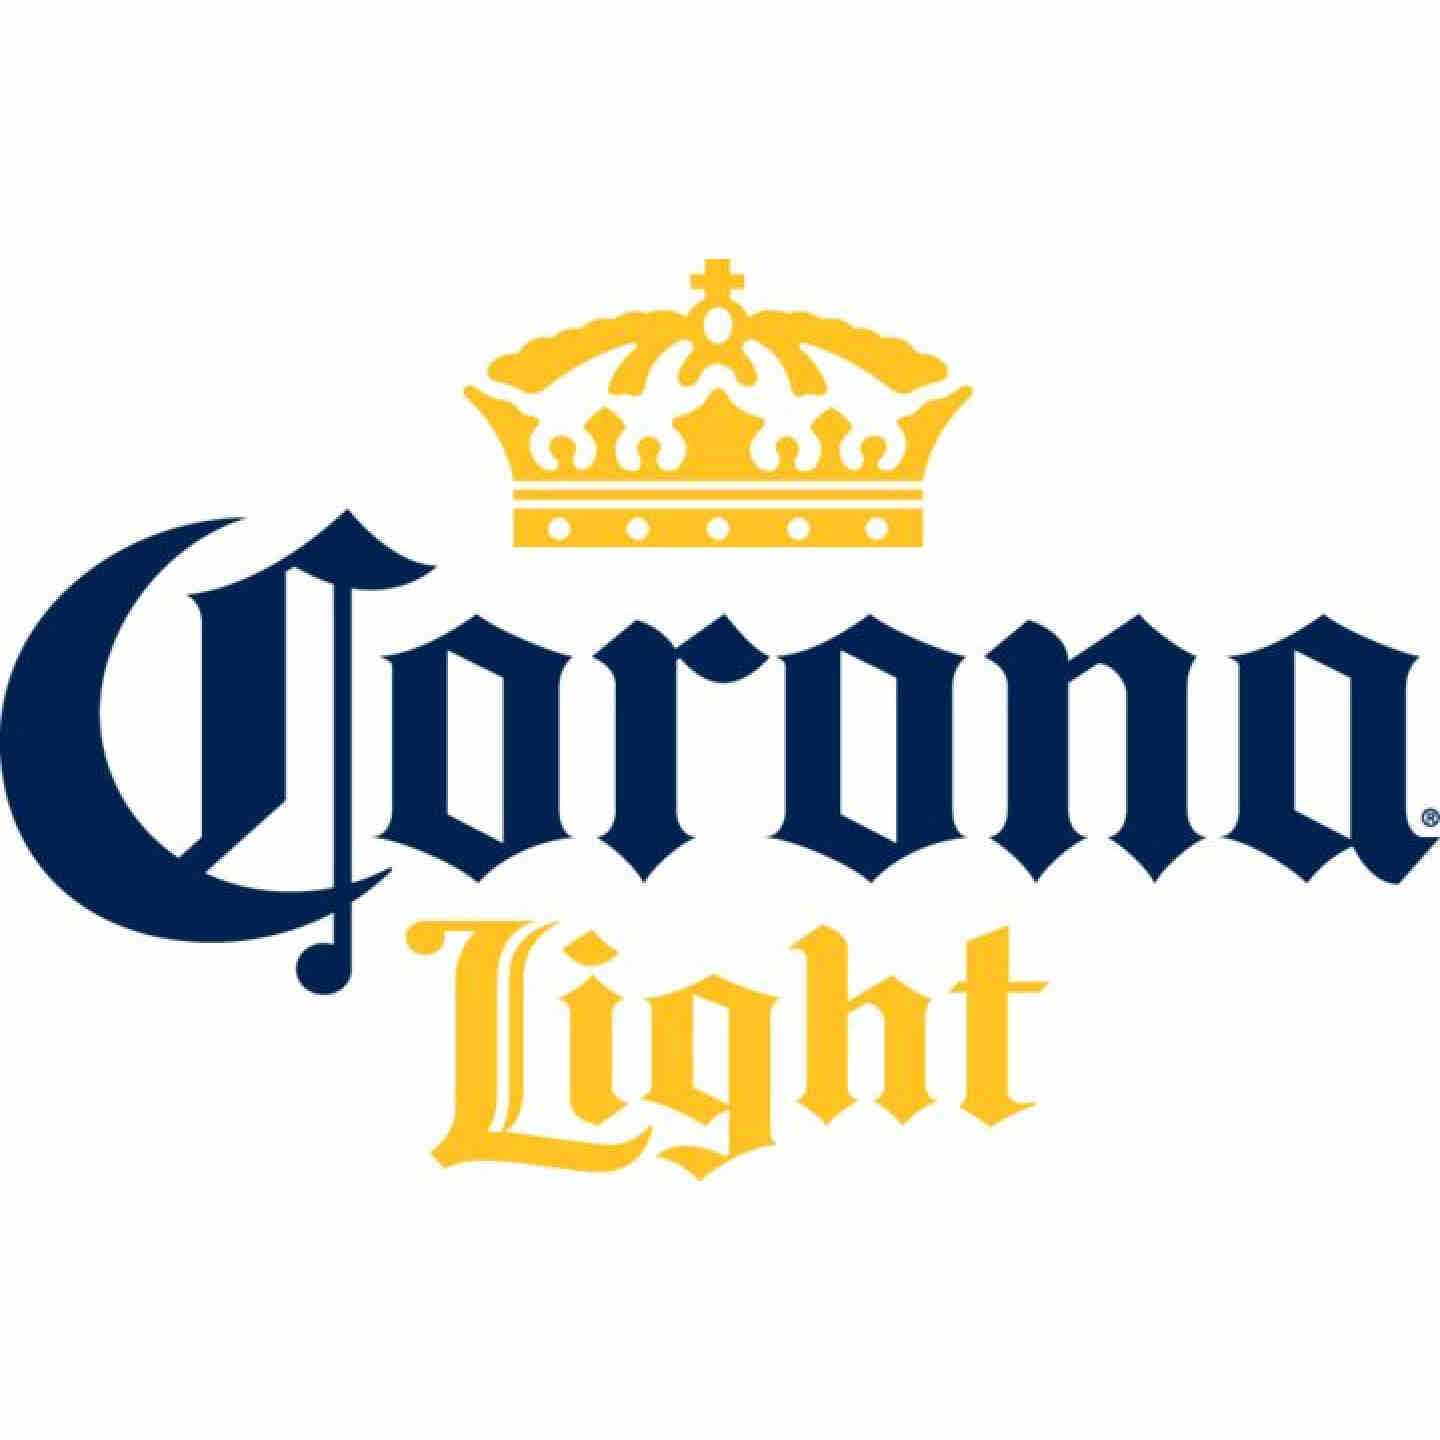 Corona Light Image 1